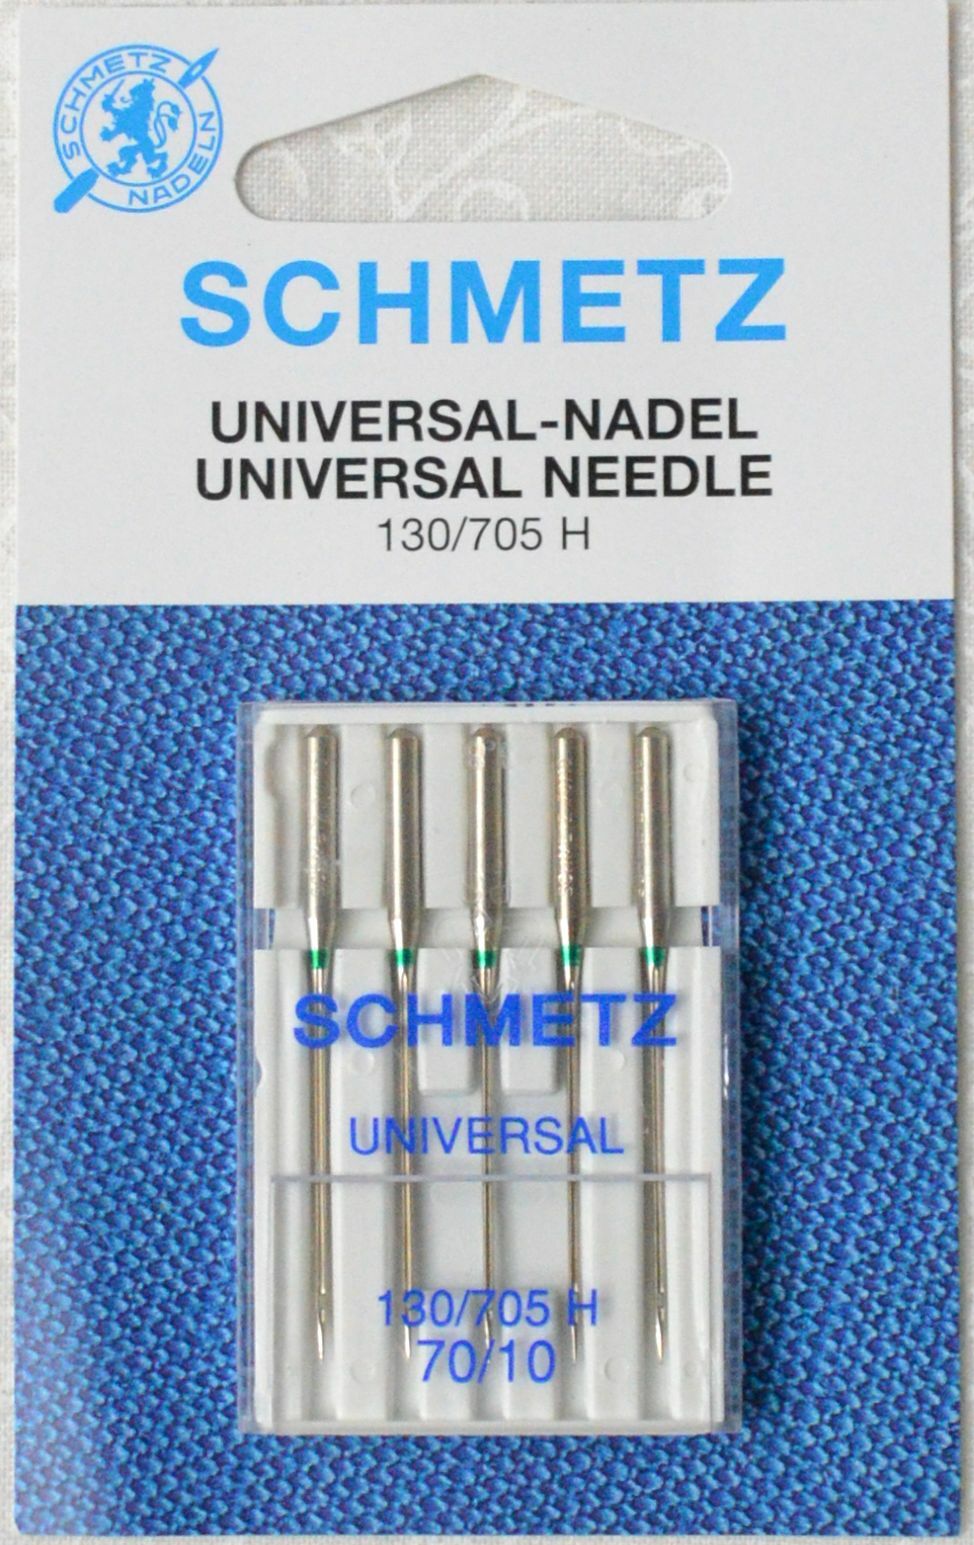 Schmetz Universal Machine Needle Sizes 70/10 to 100/16, 10 count